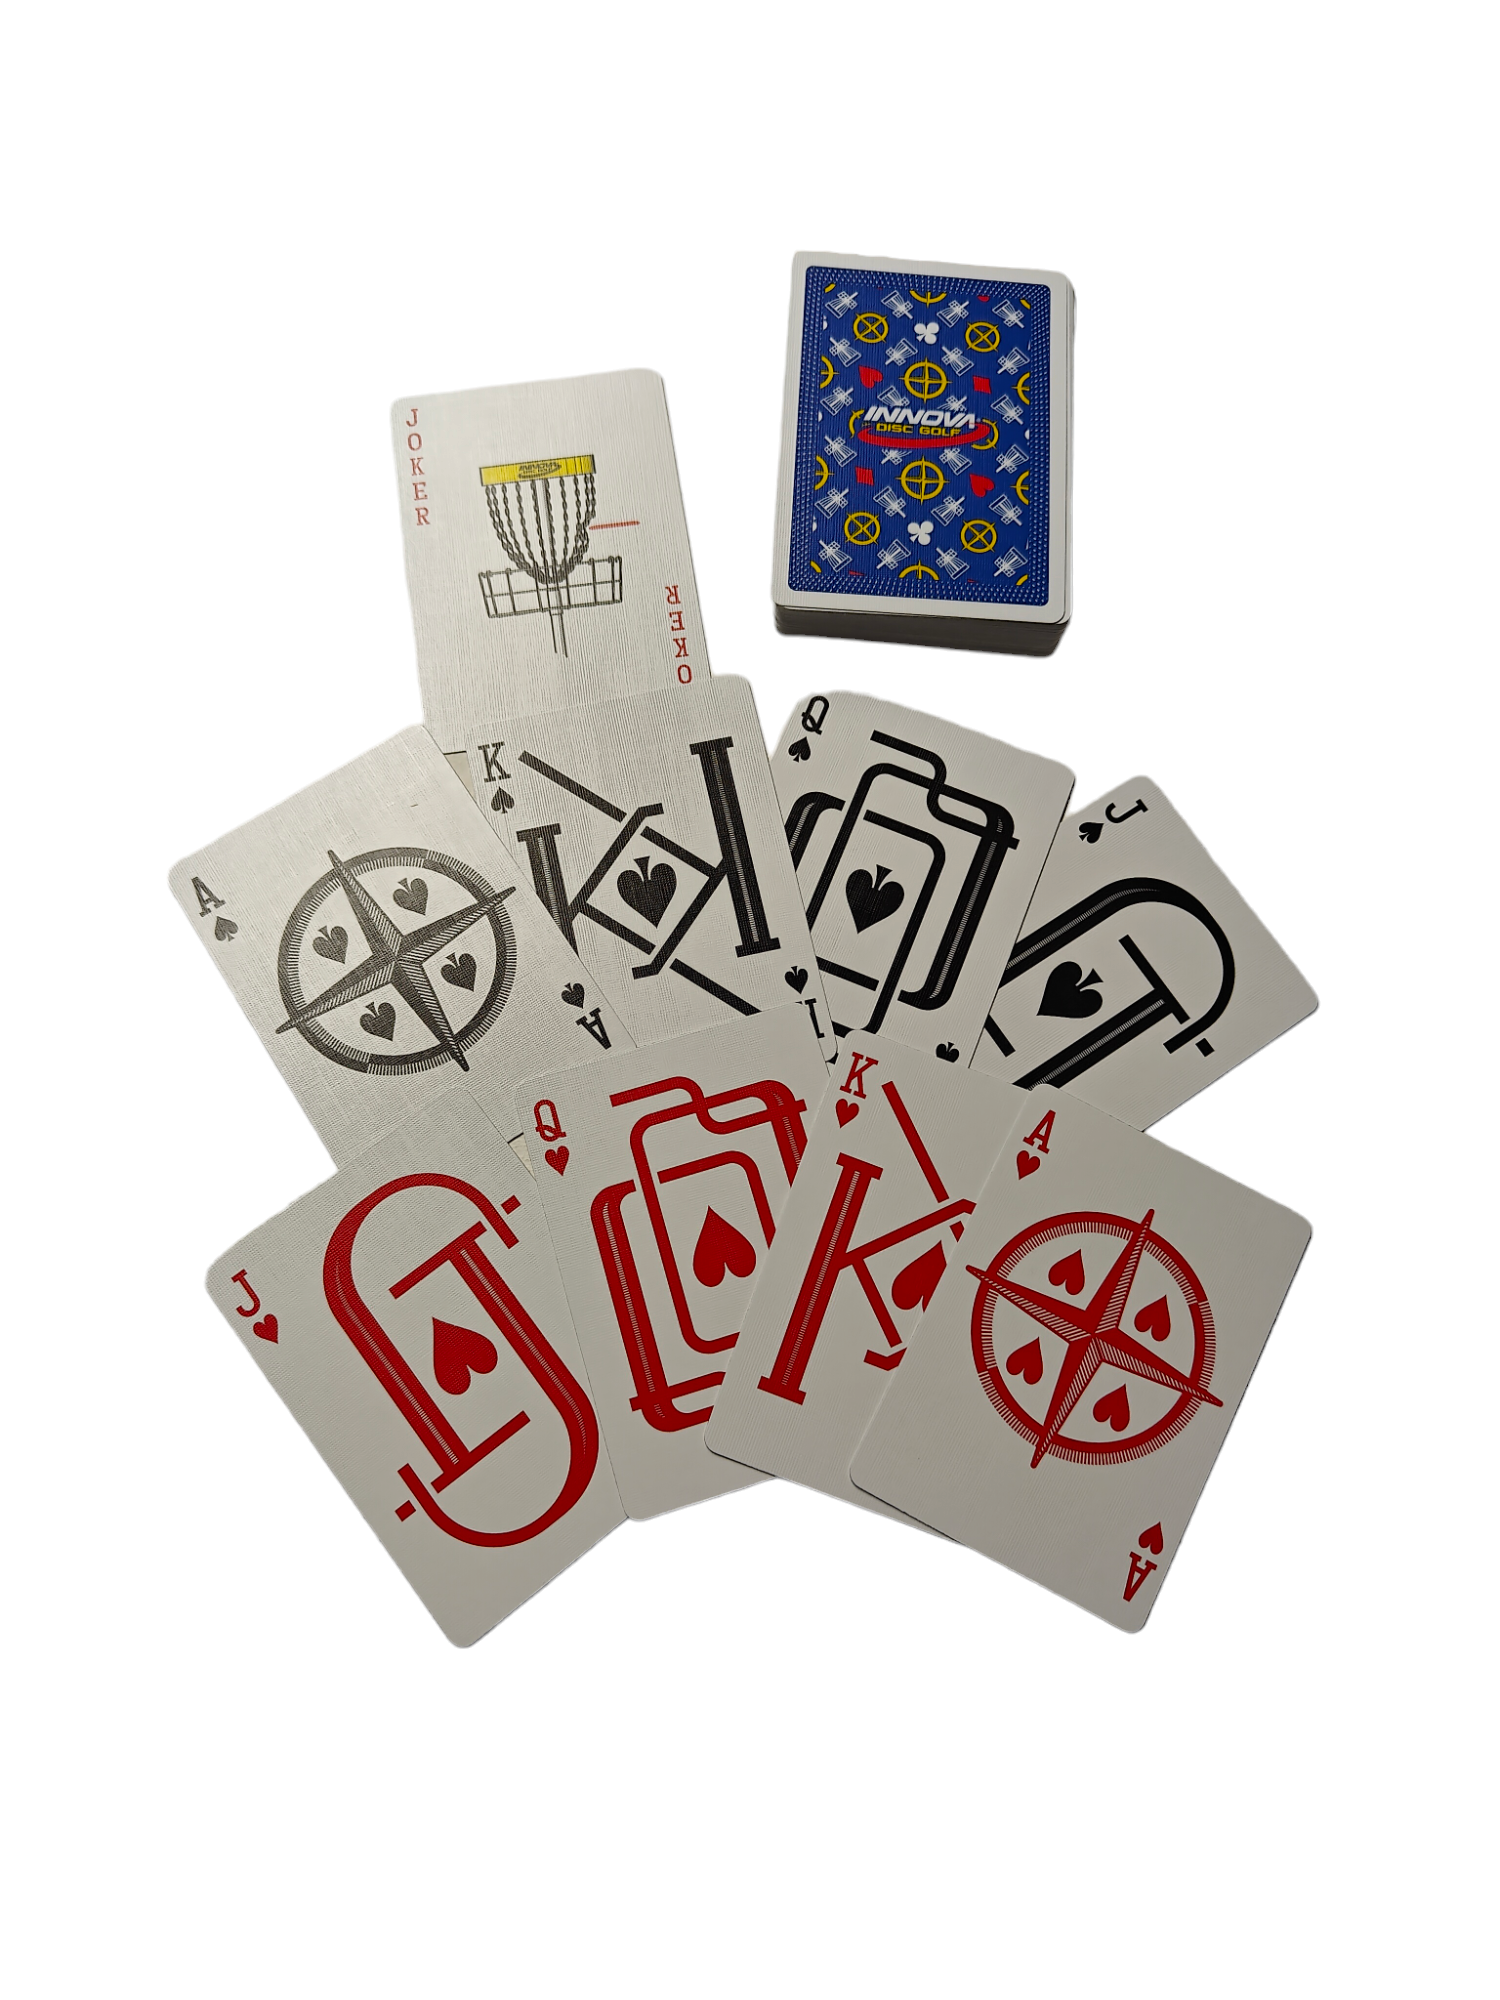 Innova playing cards